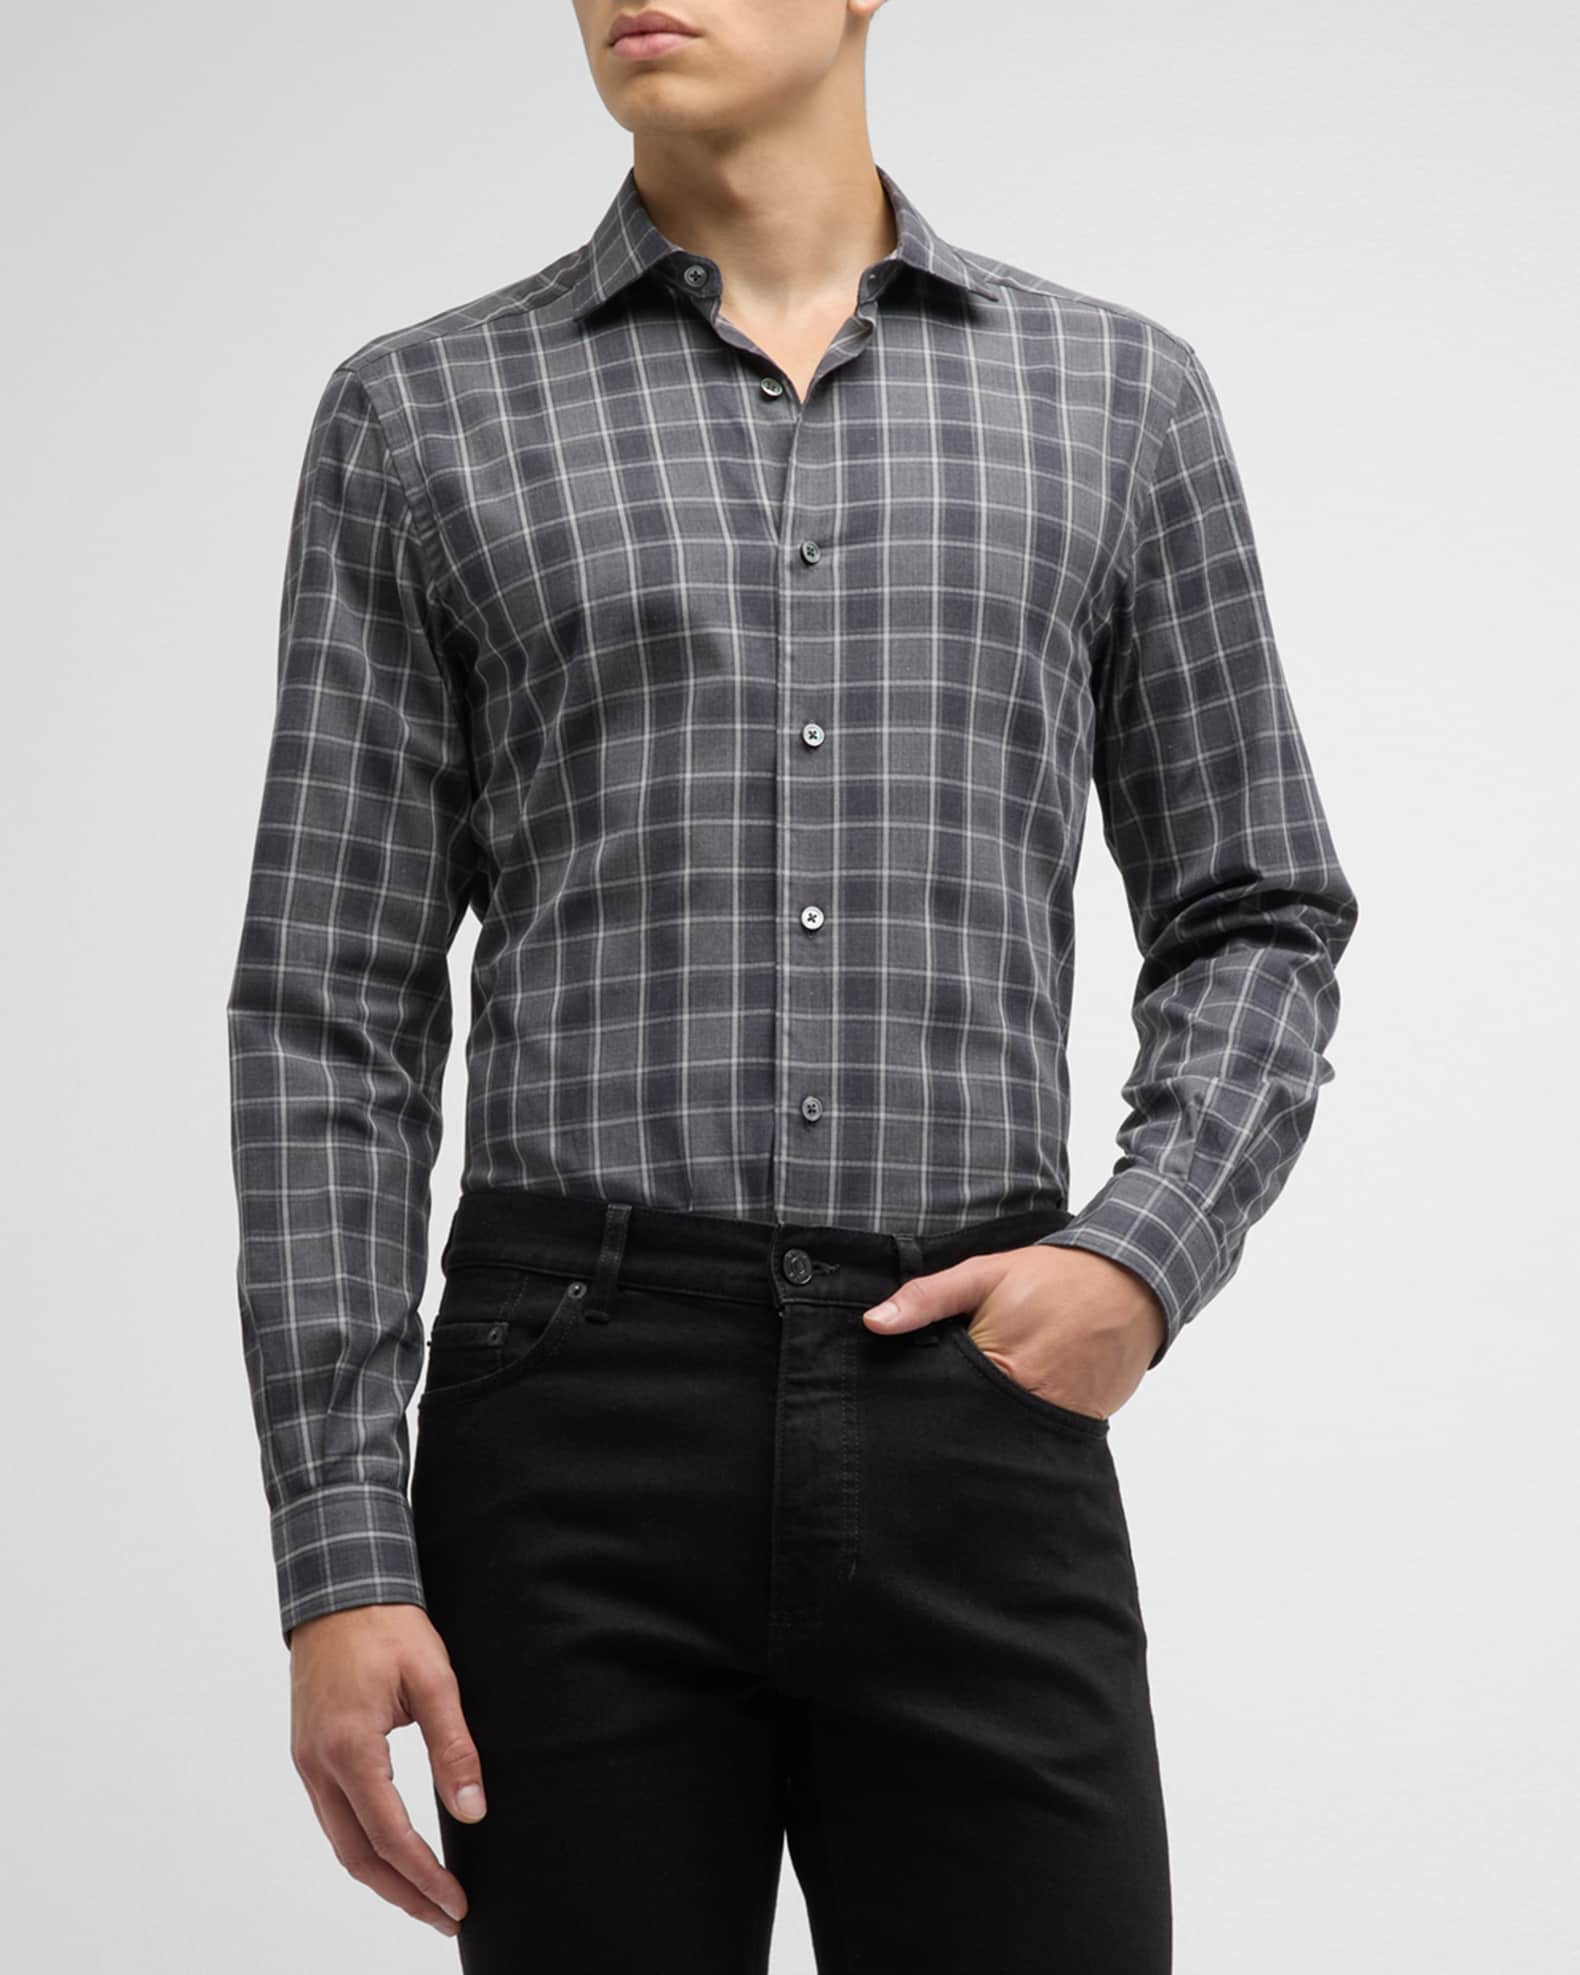 ZEGNA Men's Cotton Flannel Sport Shirt | Neiman Marcus